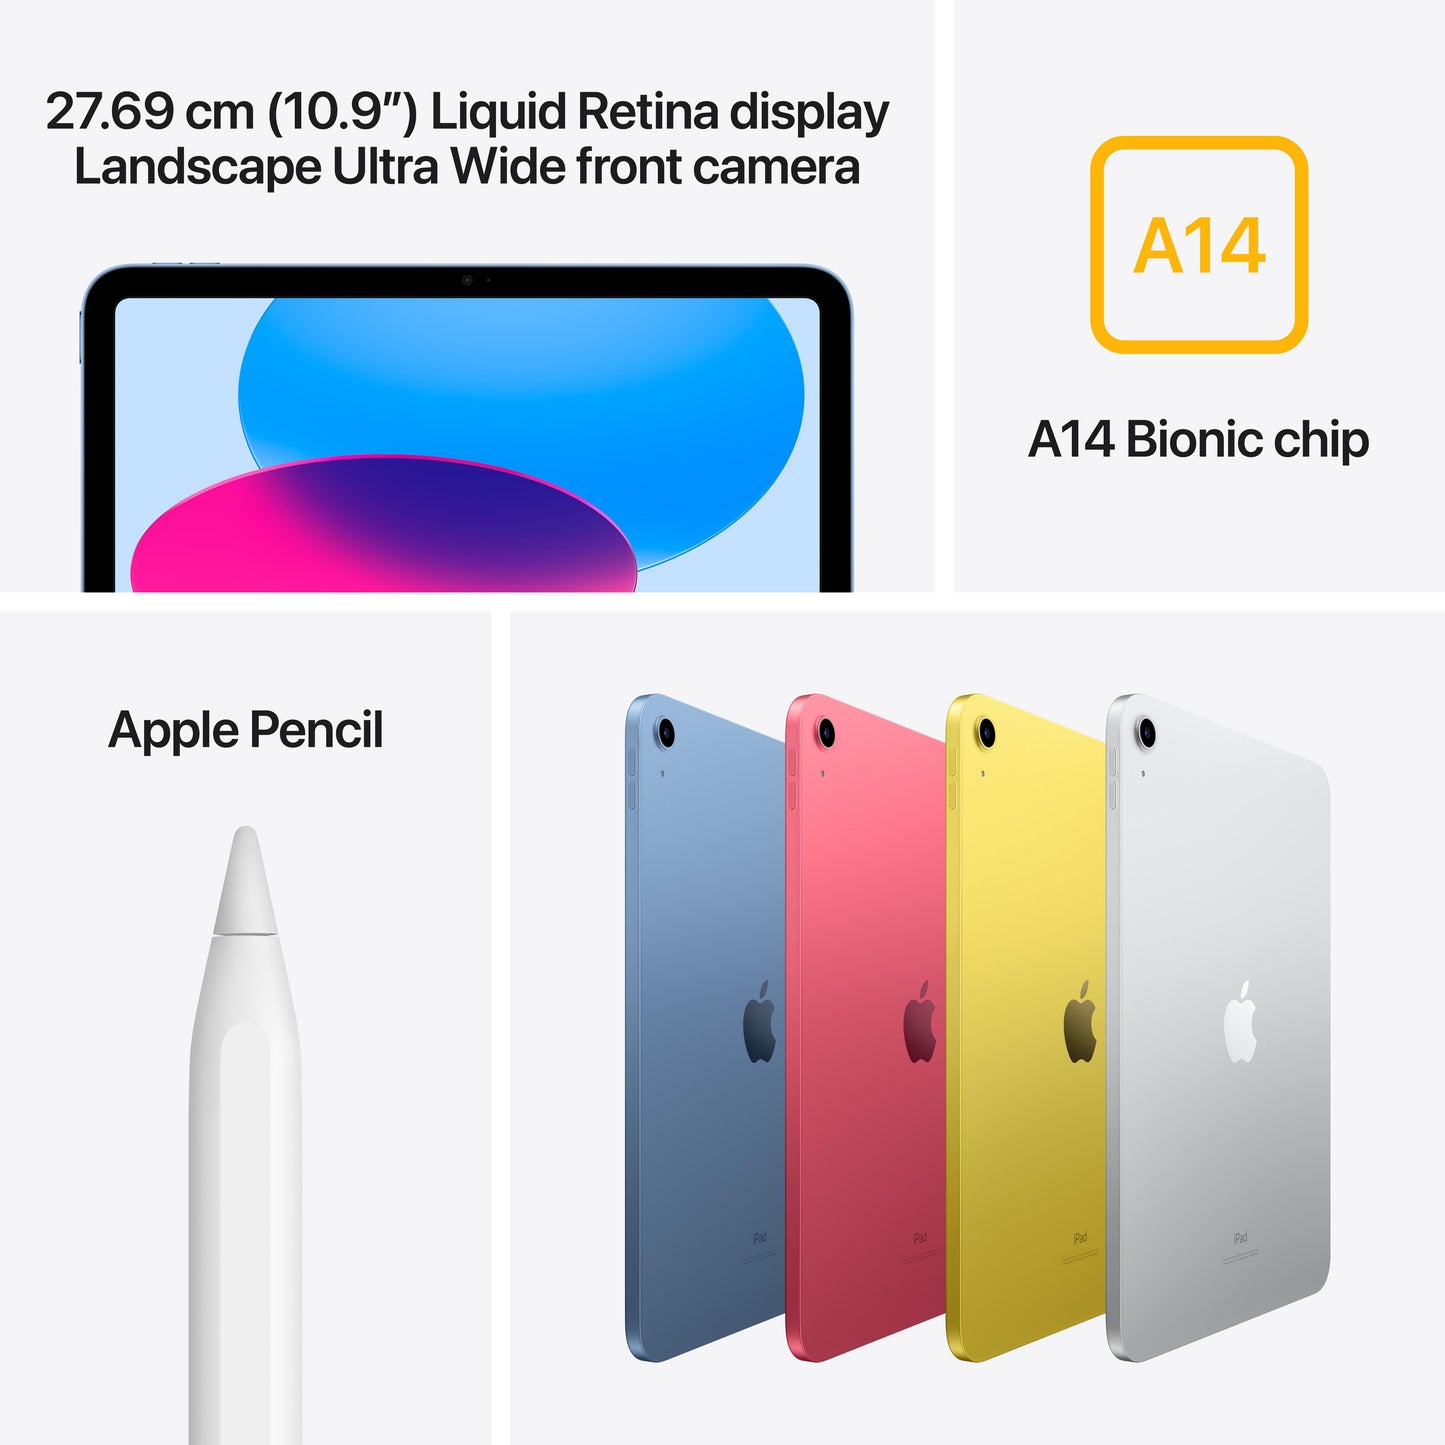 2022 10.9-inch iPad Wi-Fi 64GB - Yellow (10th generation)